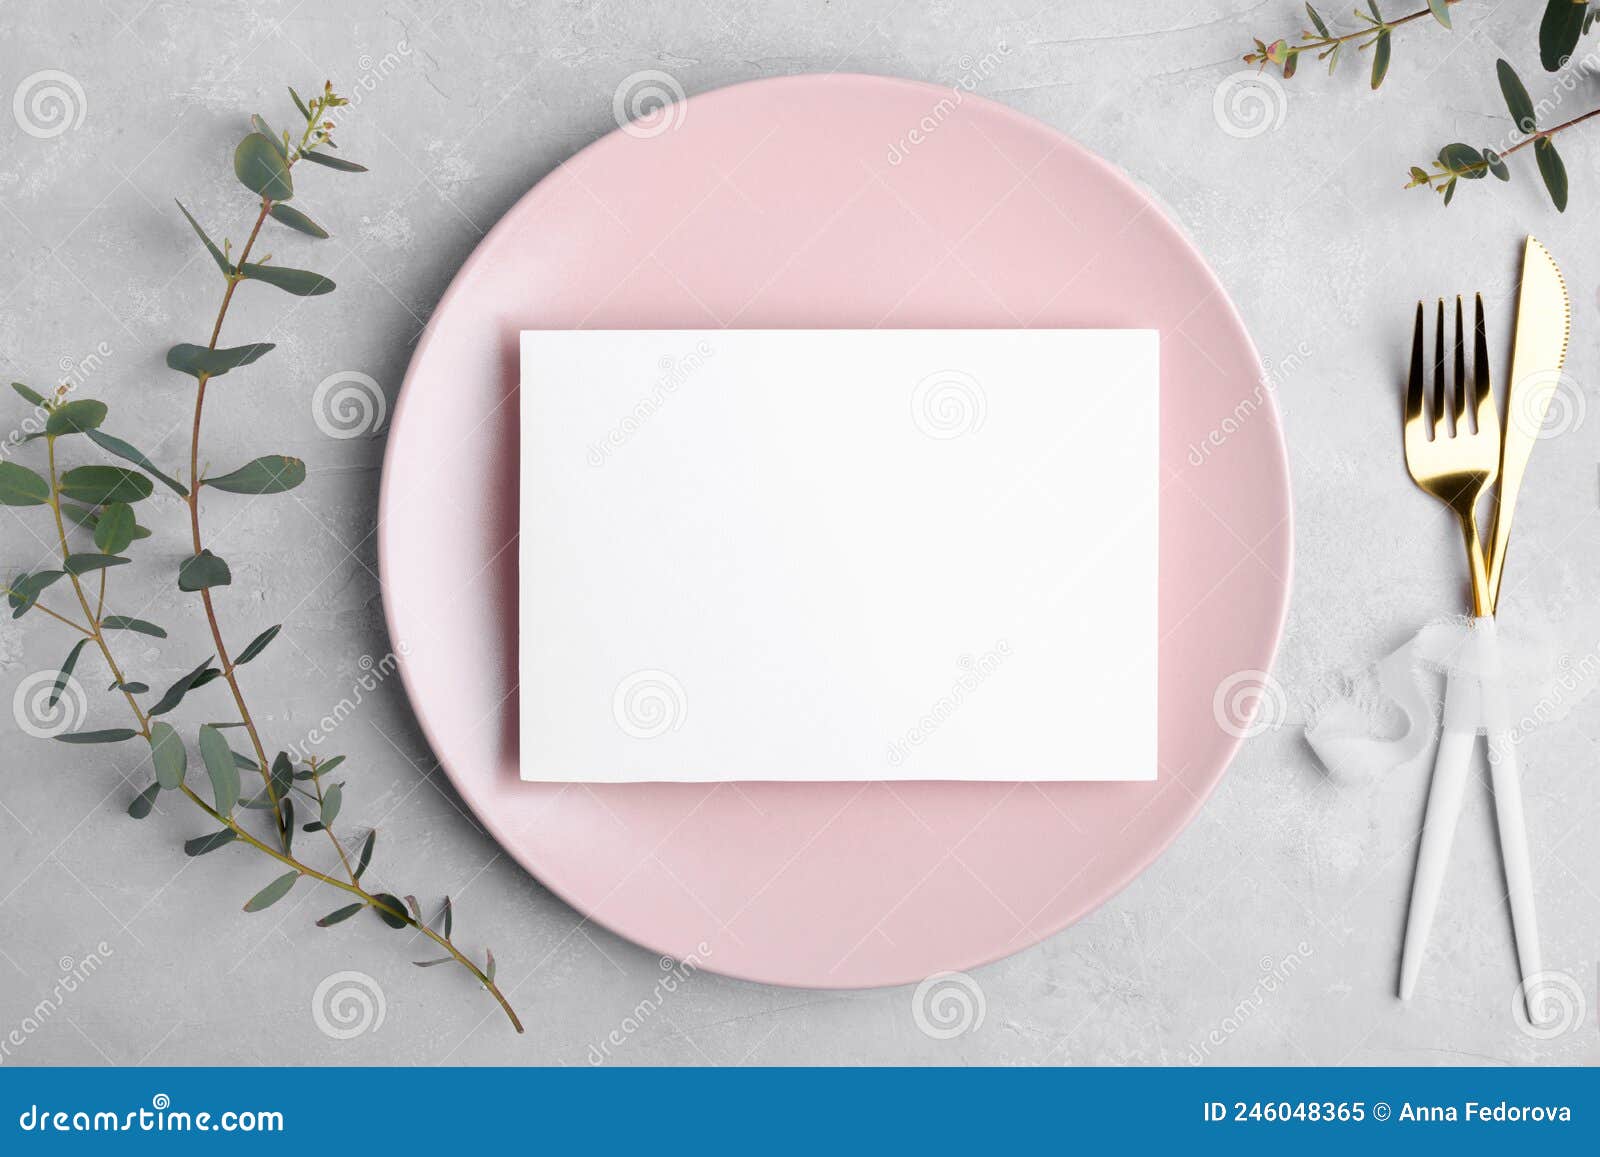 Wedding Stationery Invitation Card Mockup 7x5 on Grey Background with ...